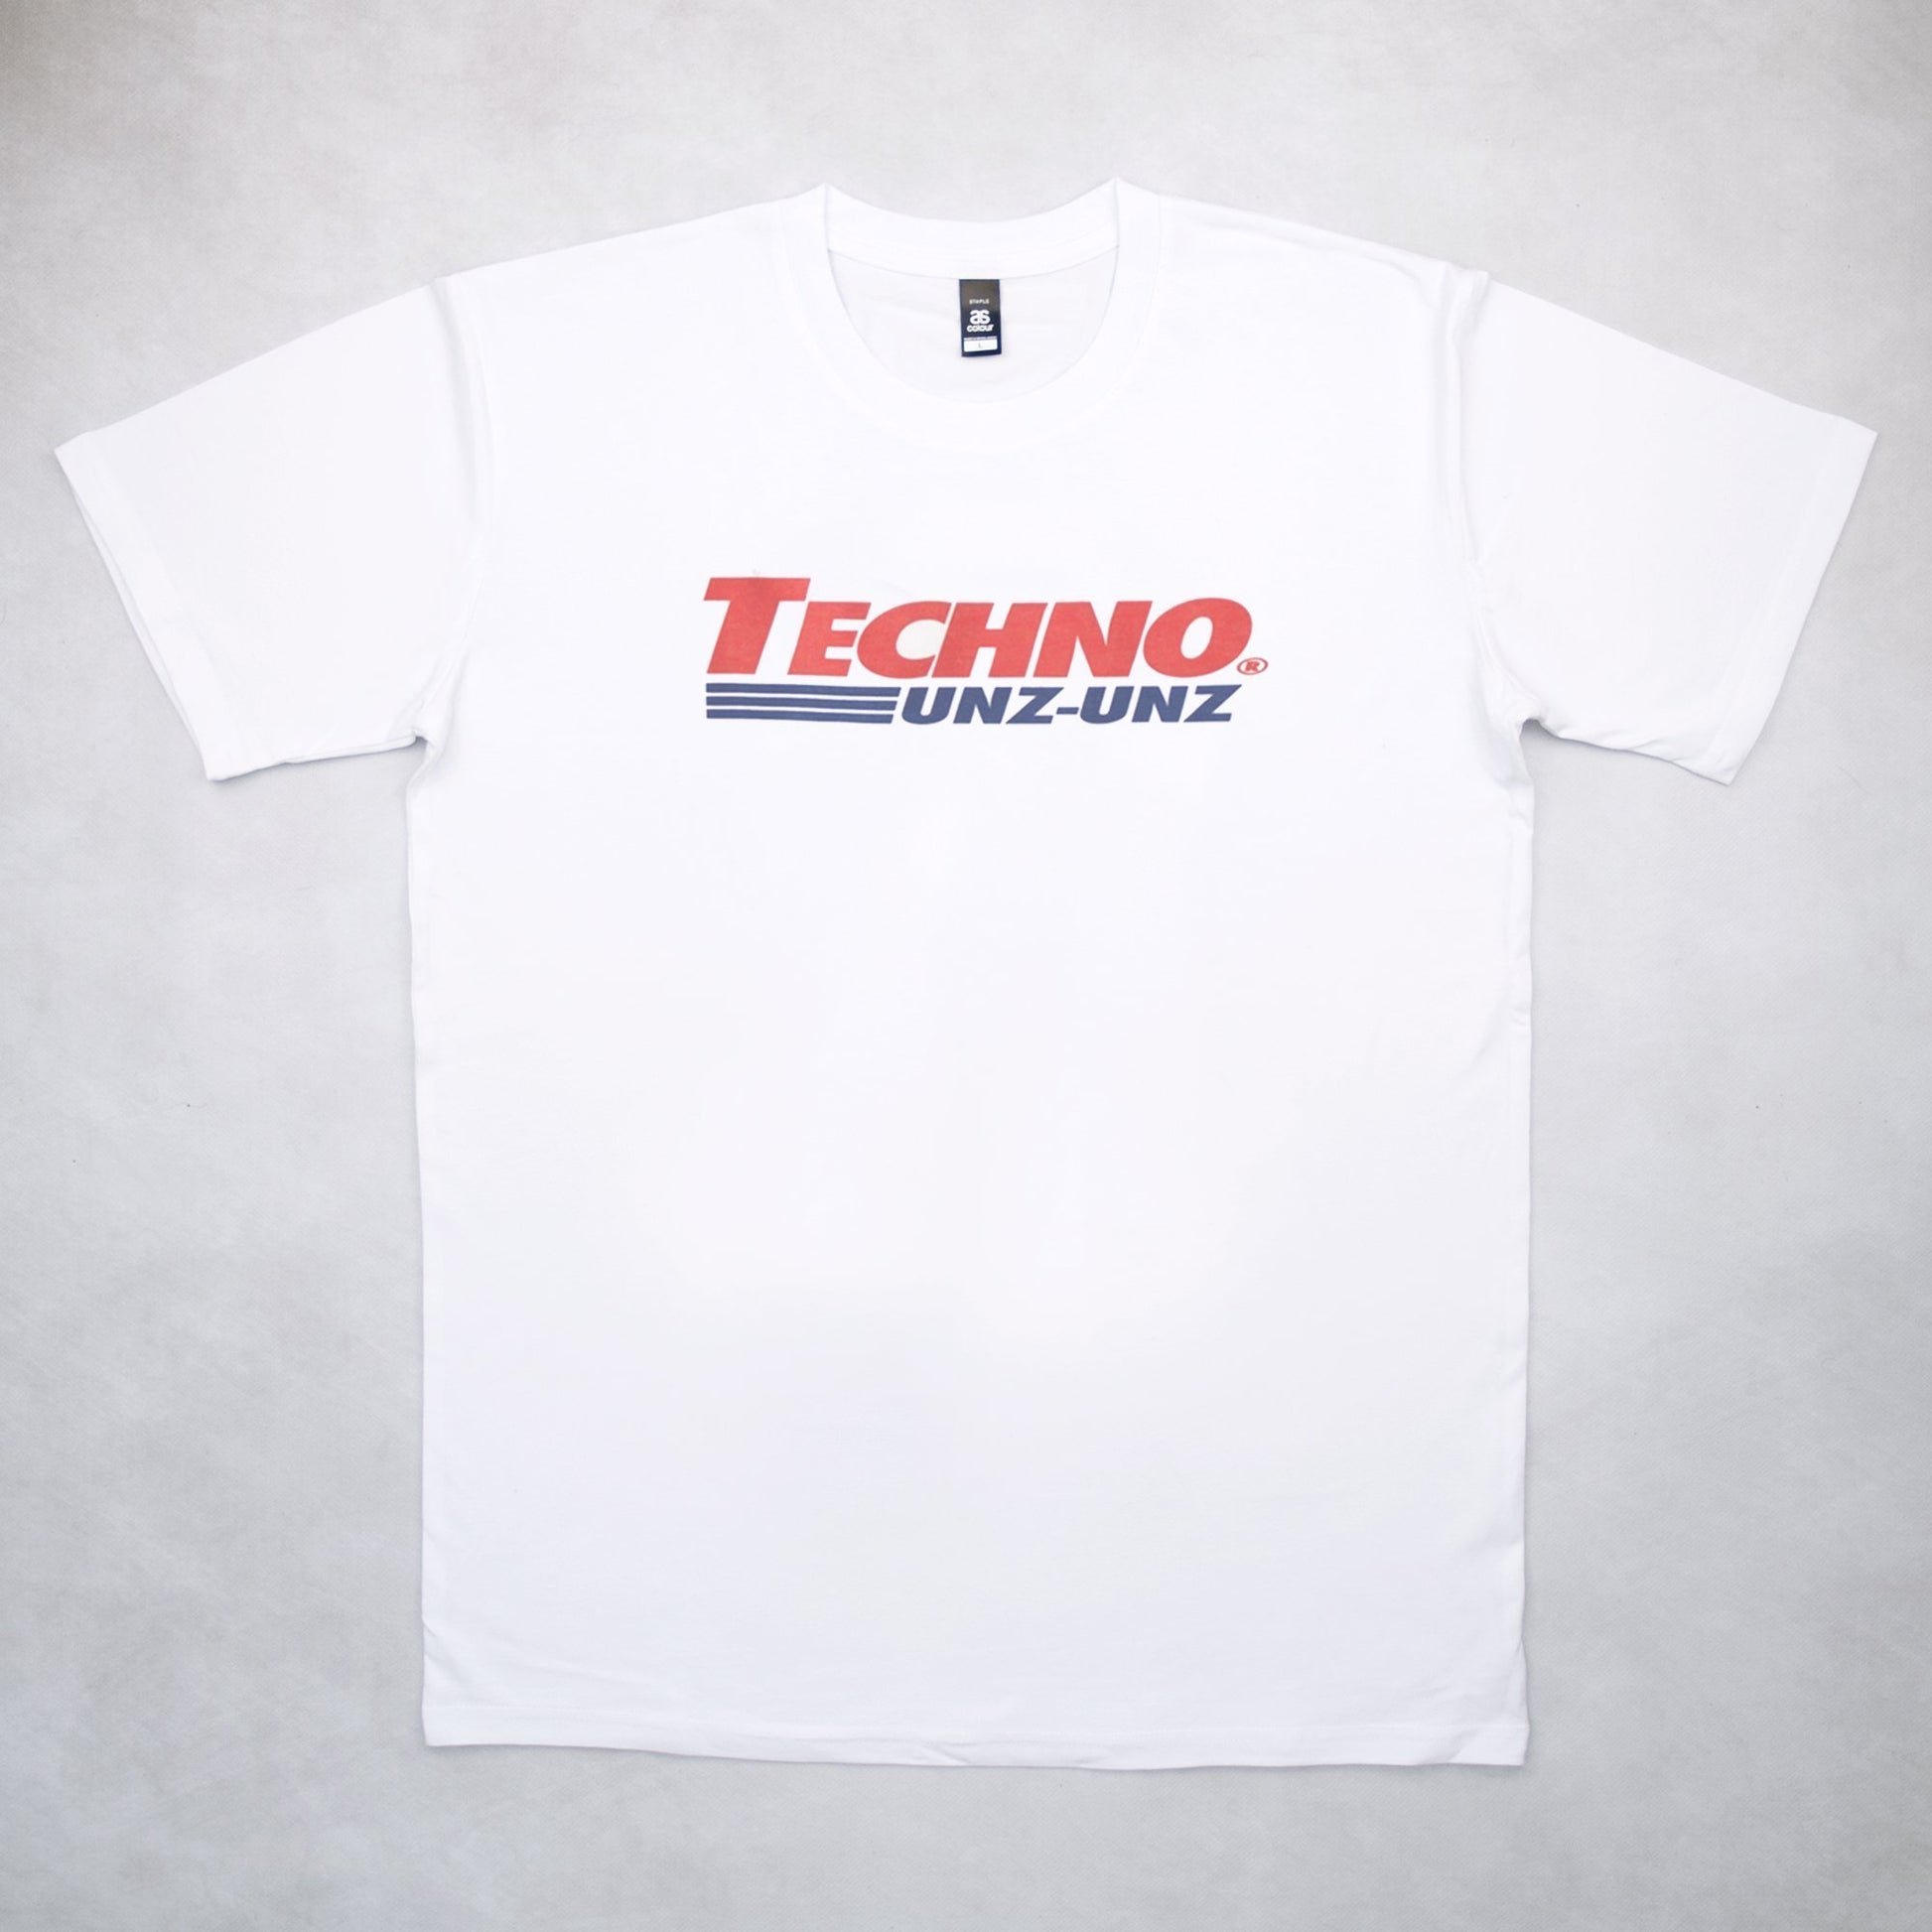 Classy Duds Long Sleeve T-Shirts Techno Long Sleeve/Short Sleeve White Tee